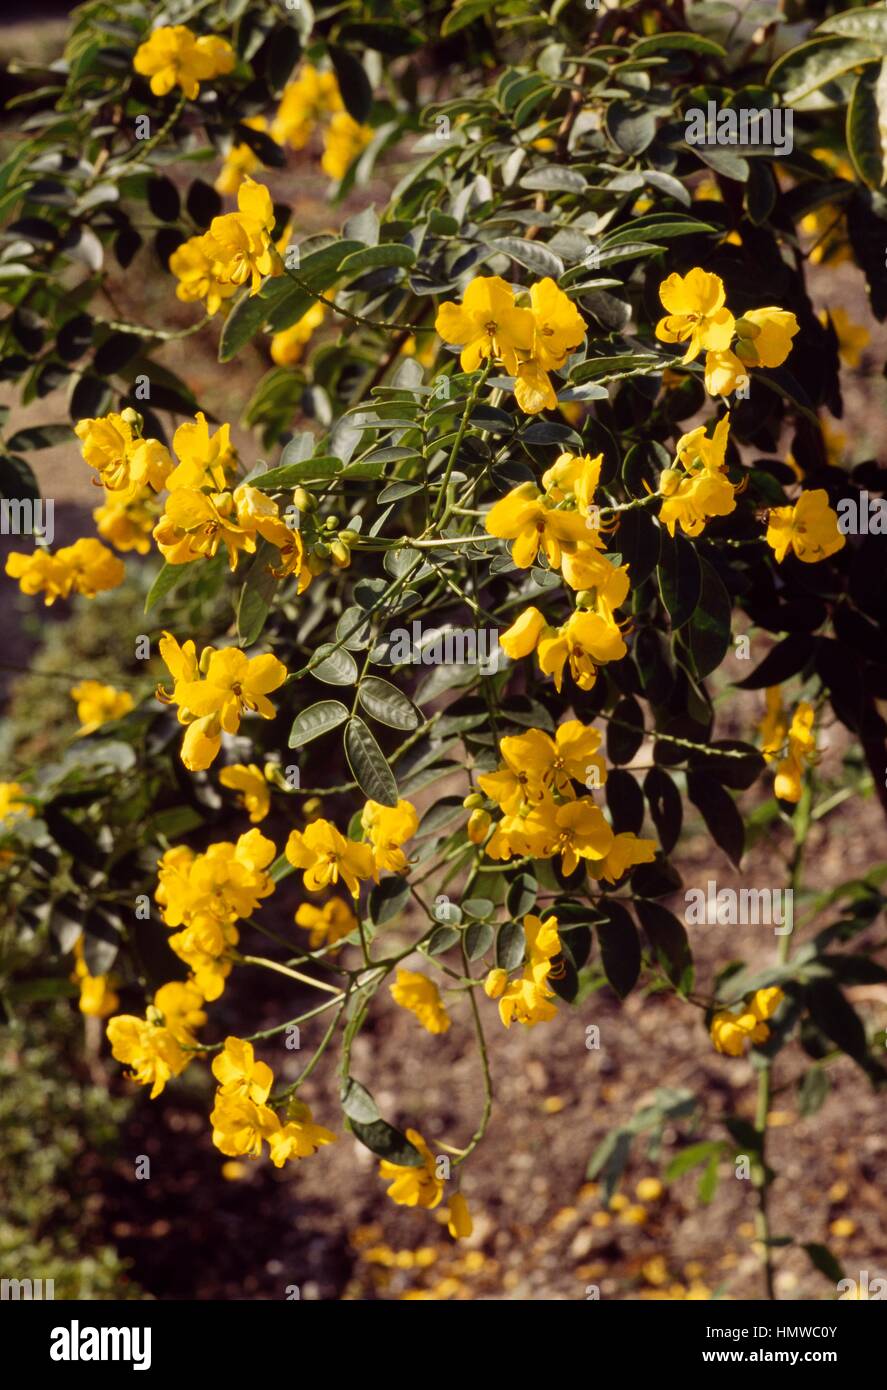 Leaves and flowers of Argentine Senna (Cassia corymbosa), Fabaceae-Leguminosae. Stock Photo